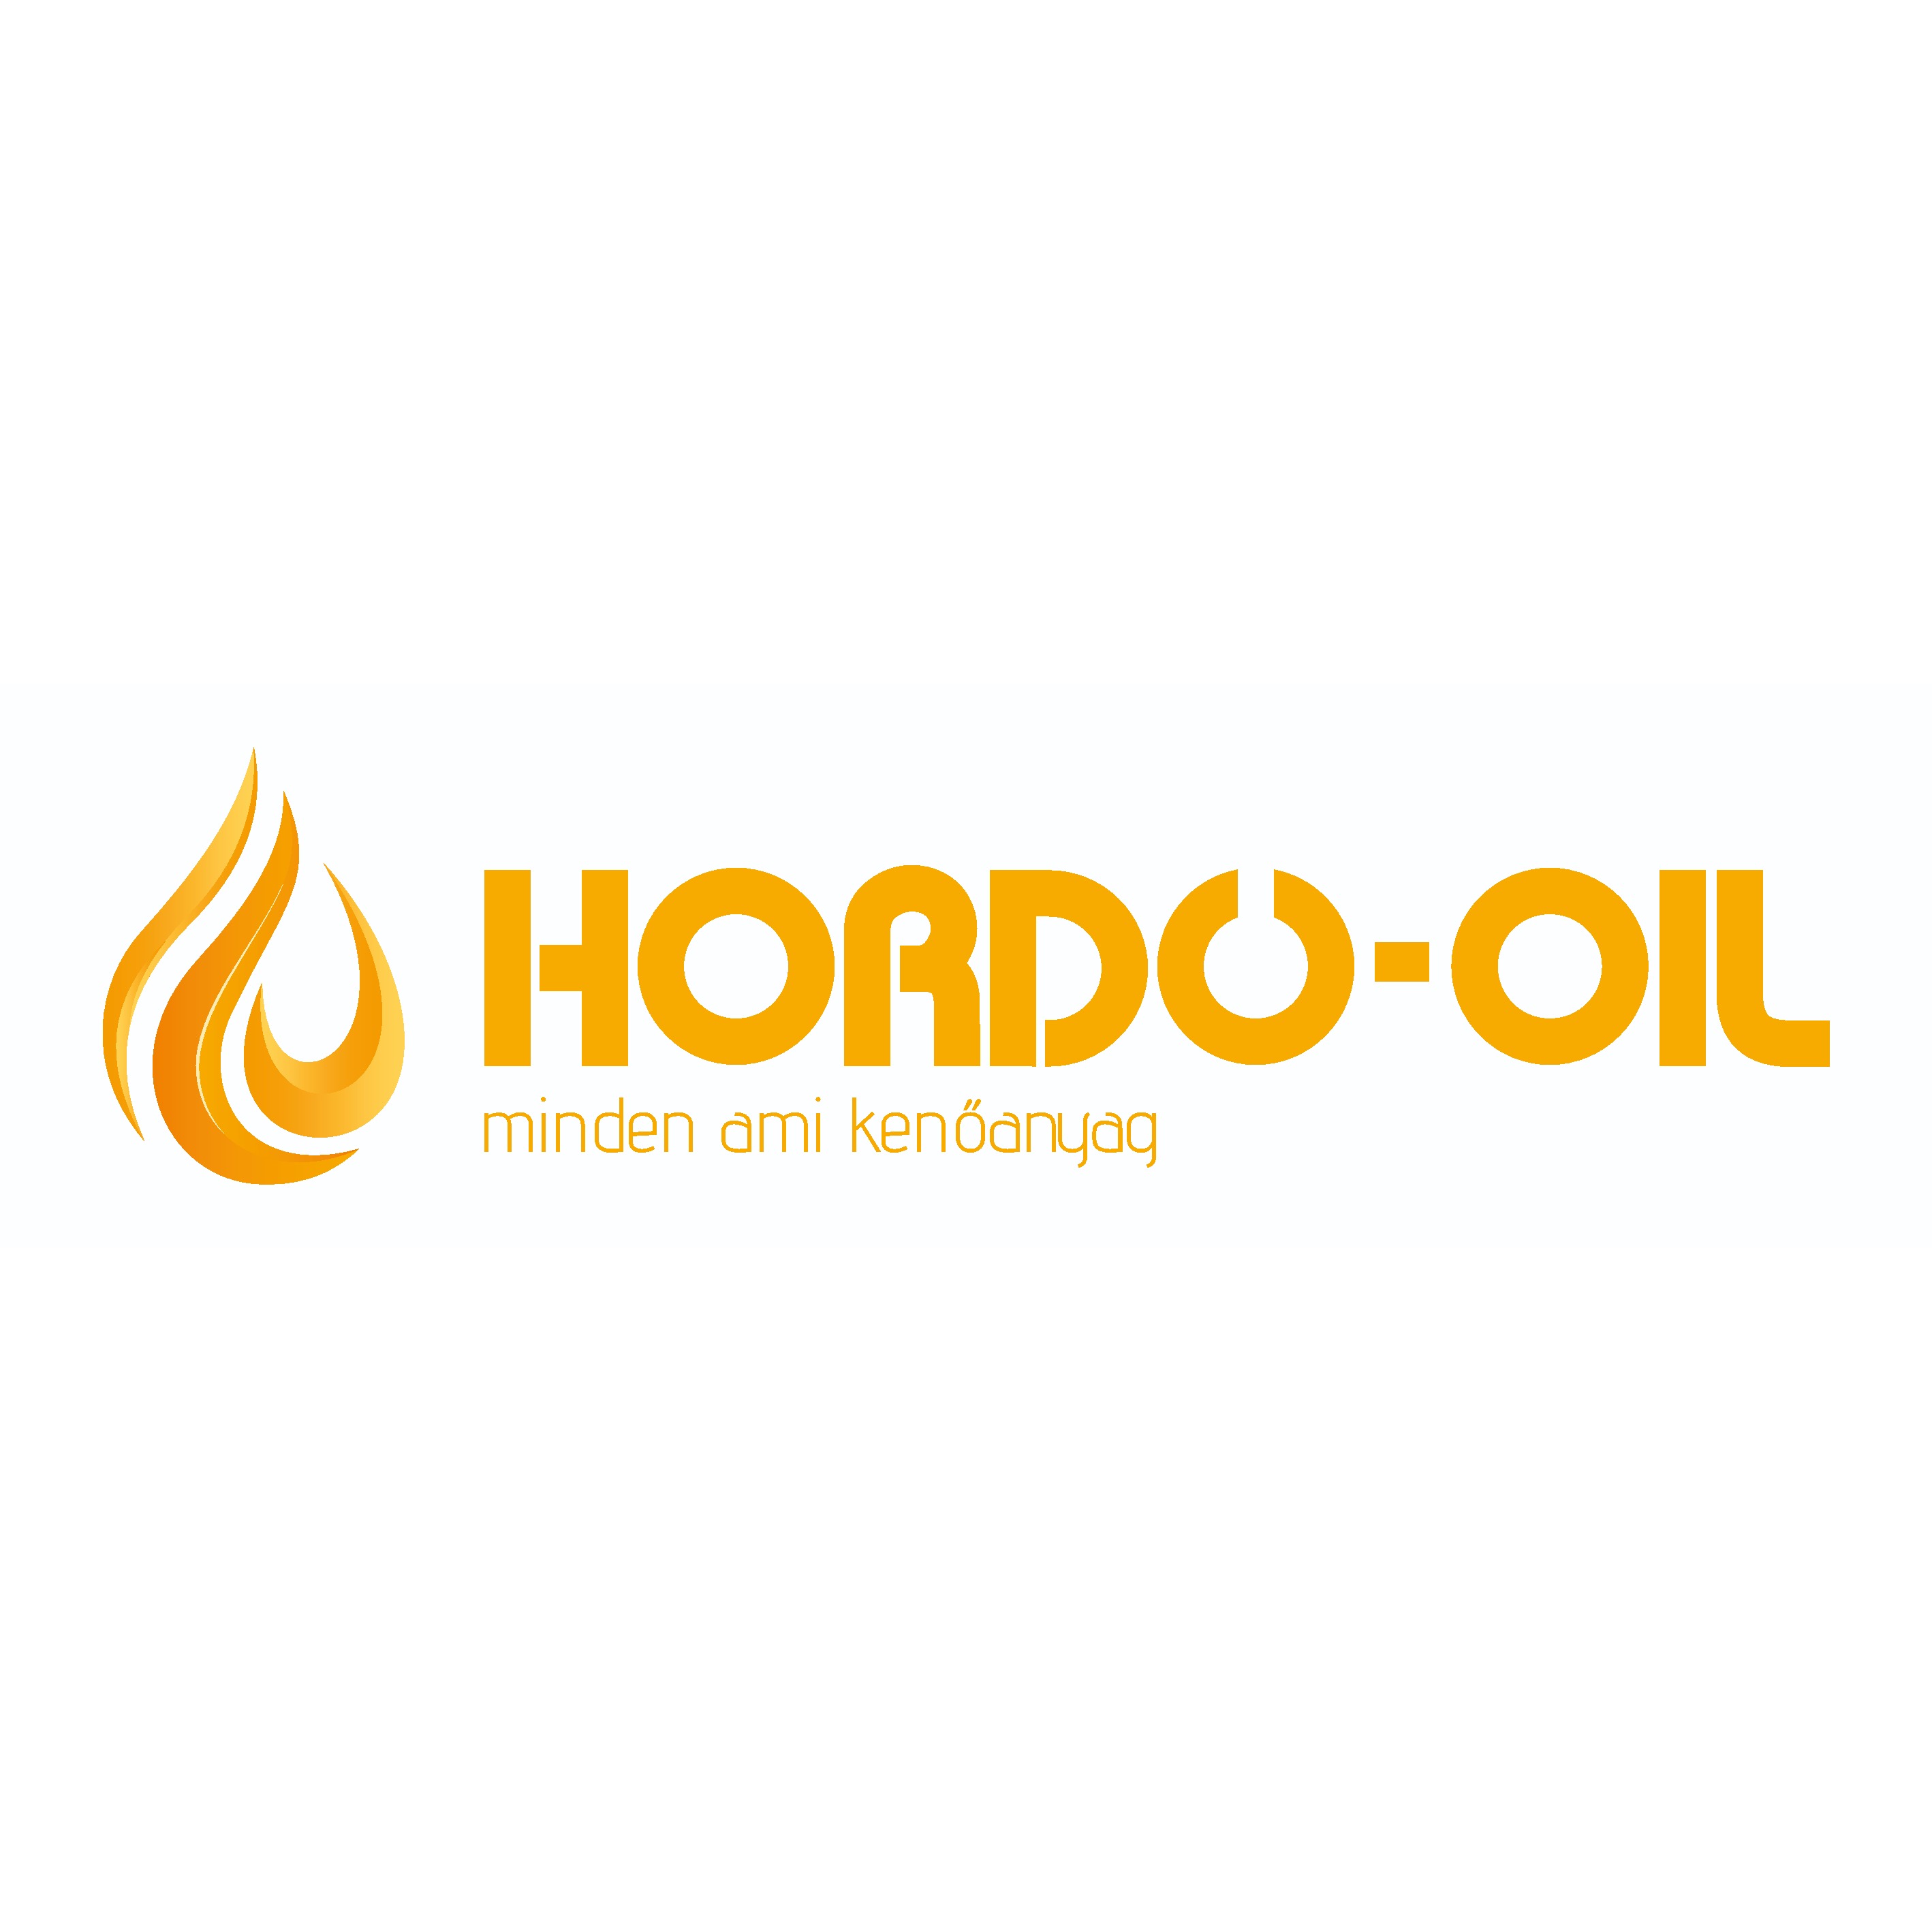 Hordó-Oil Kft. Mosonmagyaróvár (06 96) 218 333